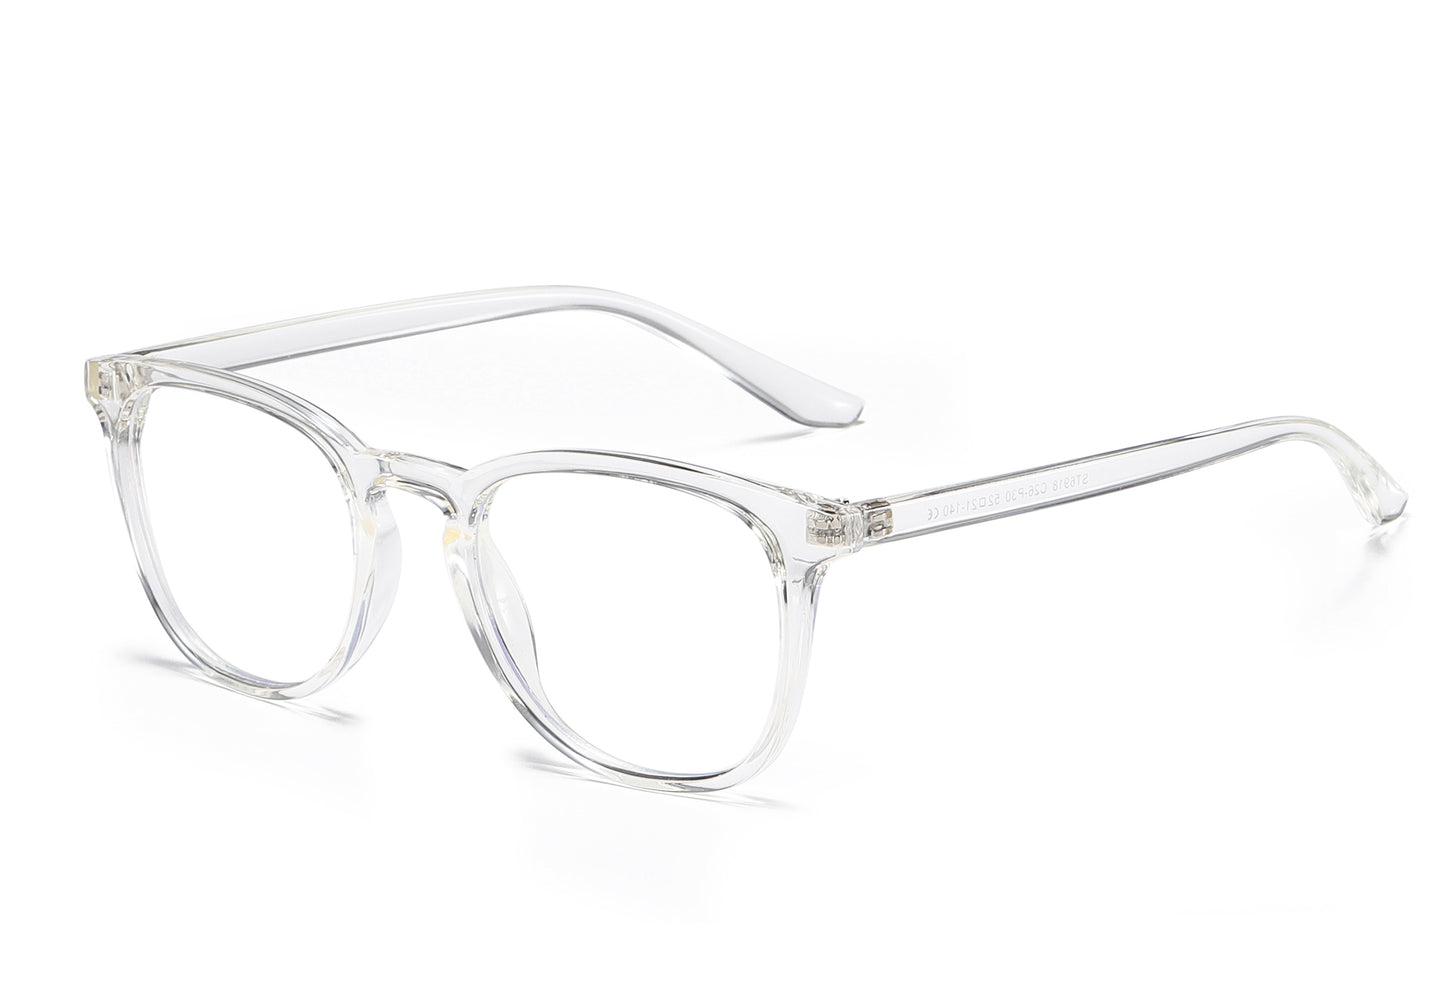 Bprotectedstore BproAB Transparent Frame Blue Light Blocking Glasses - Stylish Eye Protection-Side